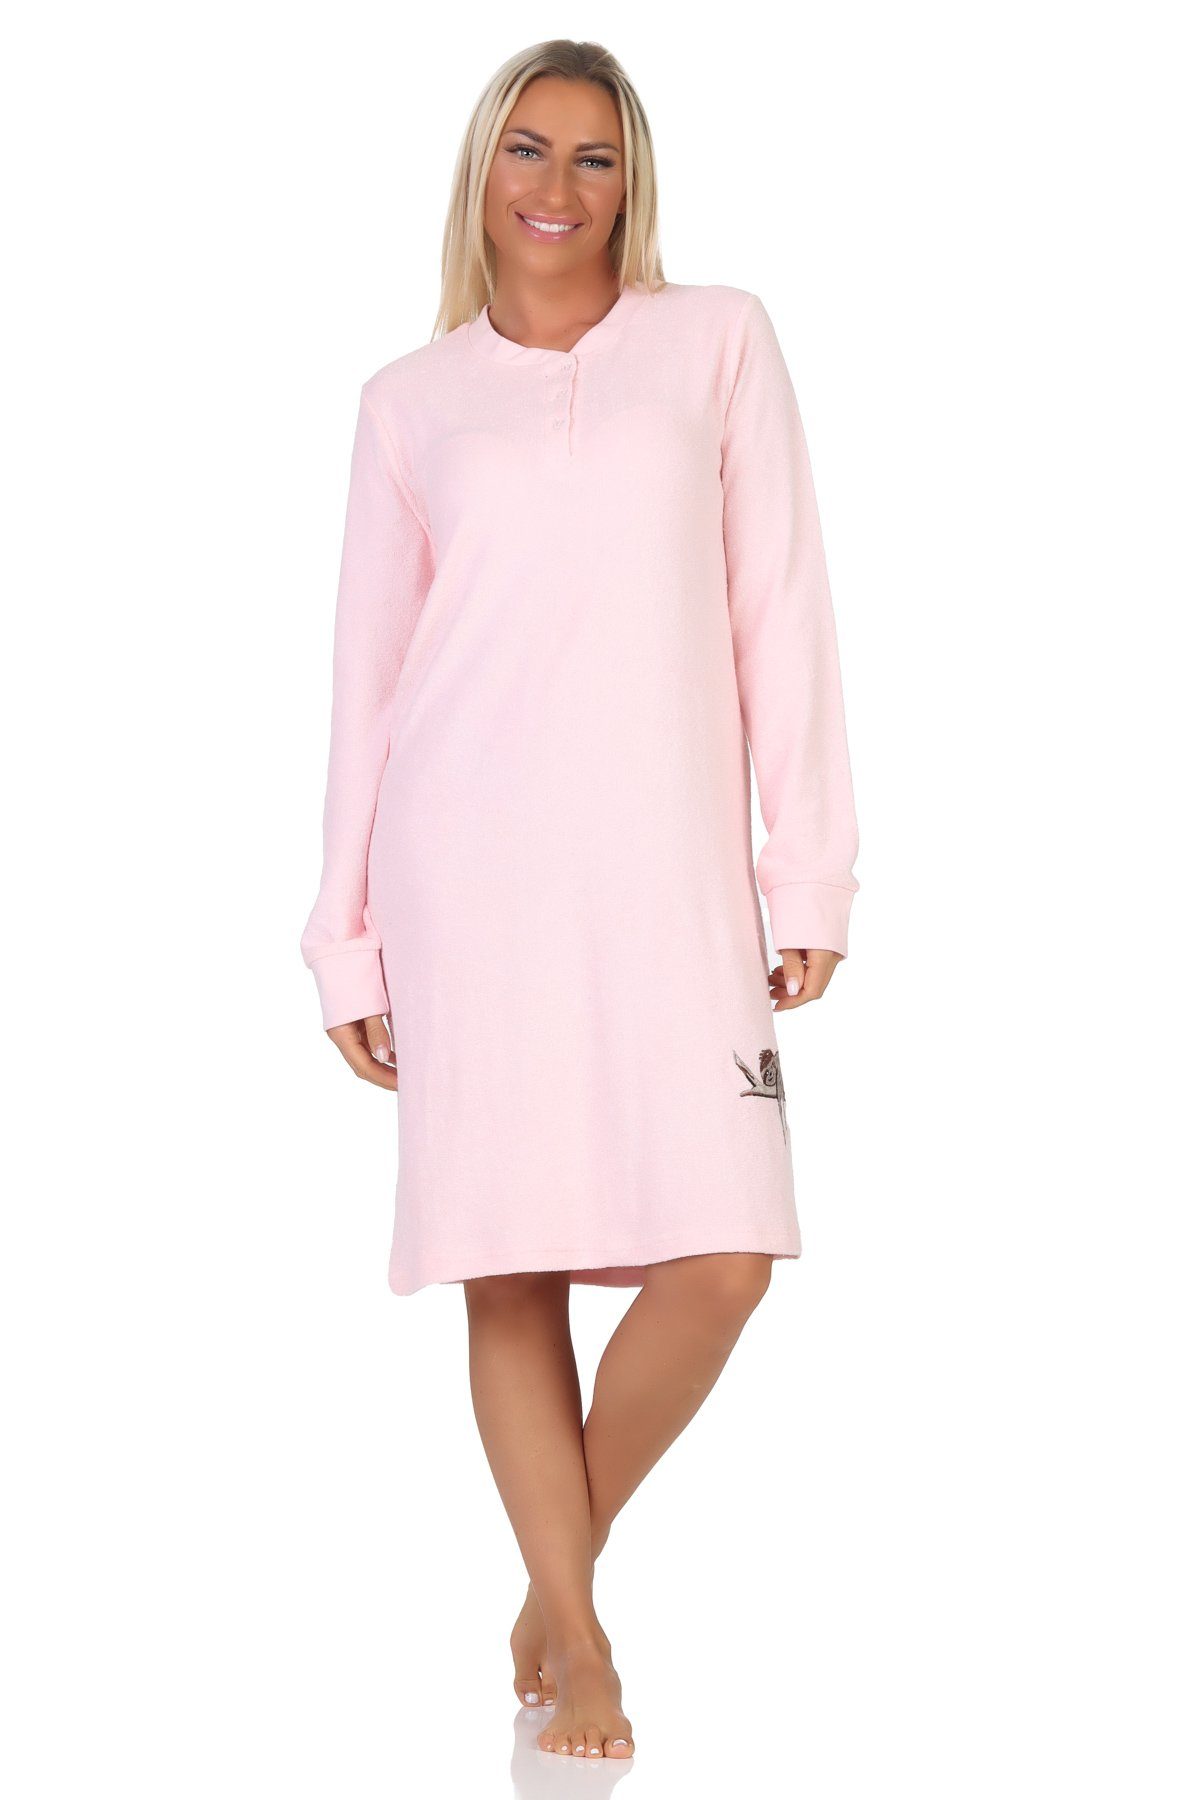 Normann Damen langarm Tiermotiv Nachthemd Nachthemd Katze - Frottee süsses Faultier rosa